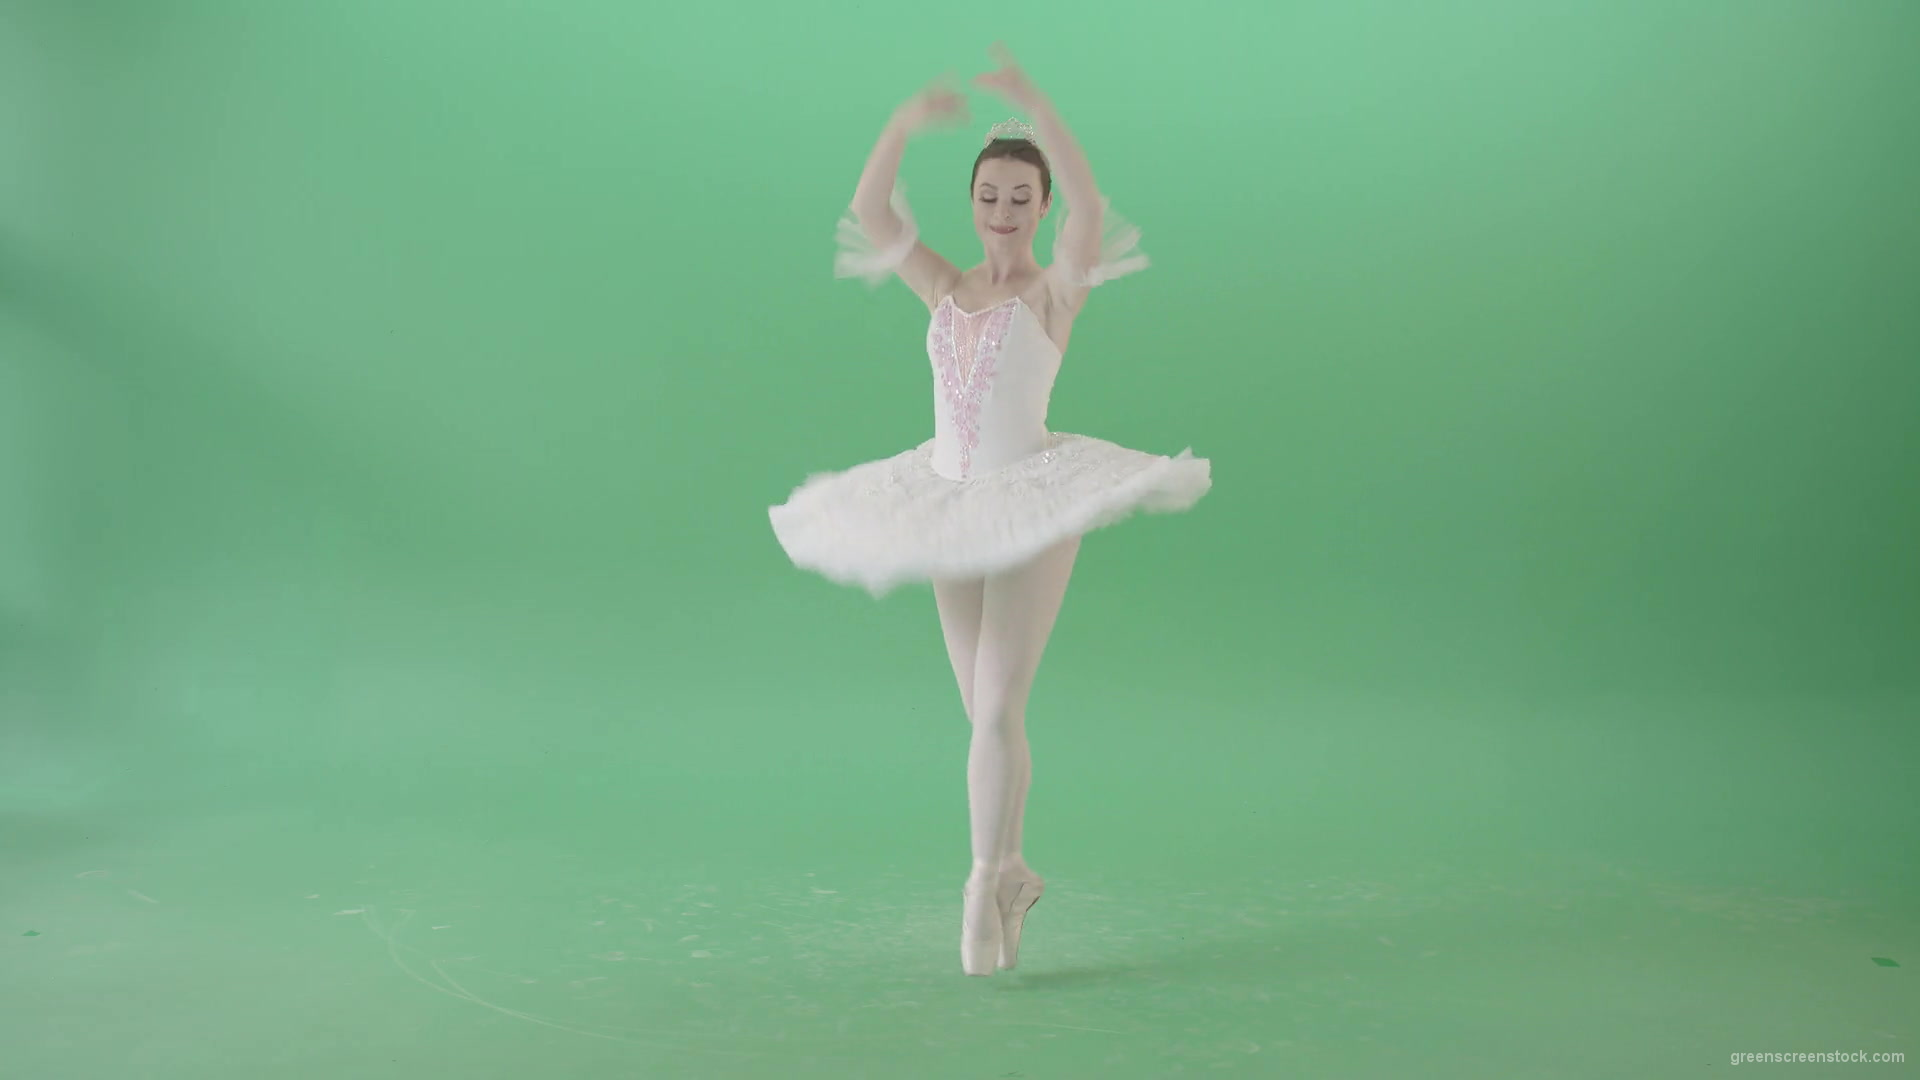 Flexibility-ballet-dancing-performance-girl-dancing-Classical-adagio-opera-on-green-screen-4K-Video-footage-1920_008 Green Screen Stock